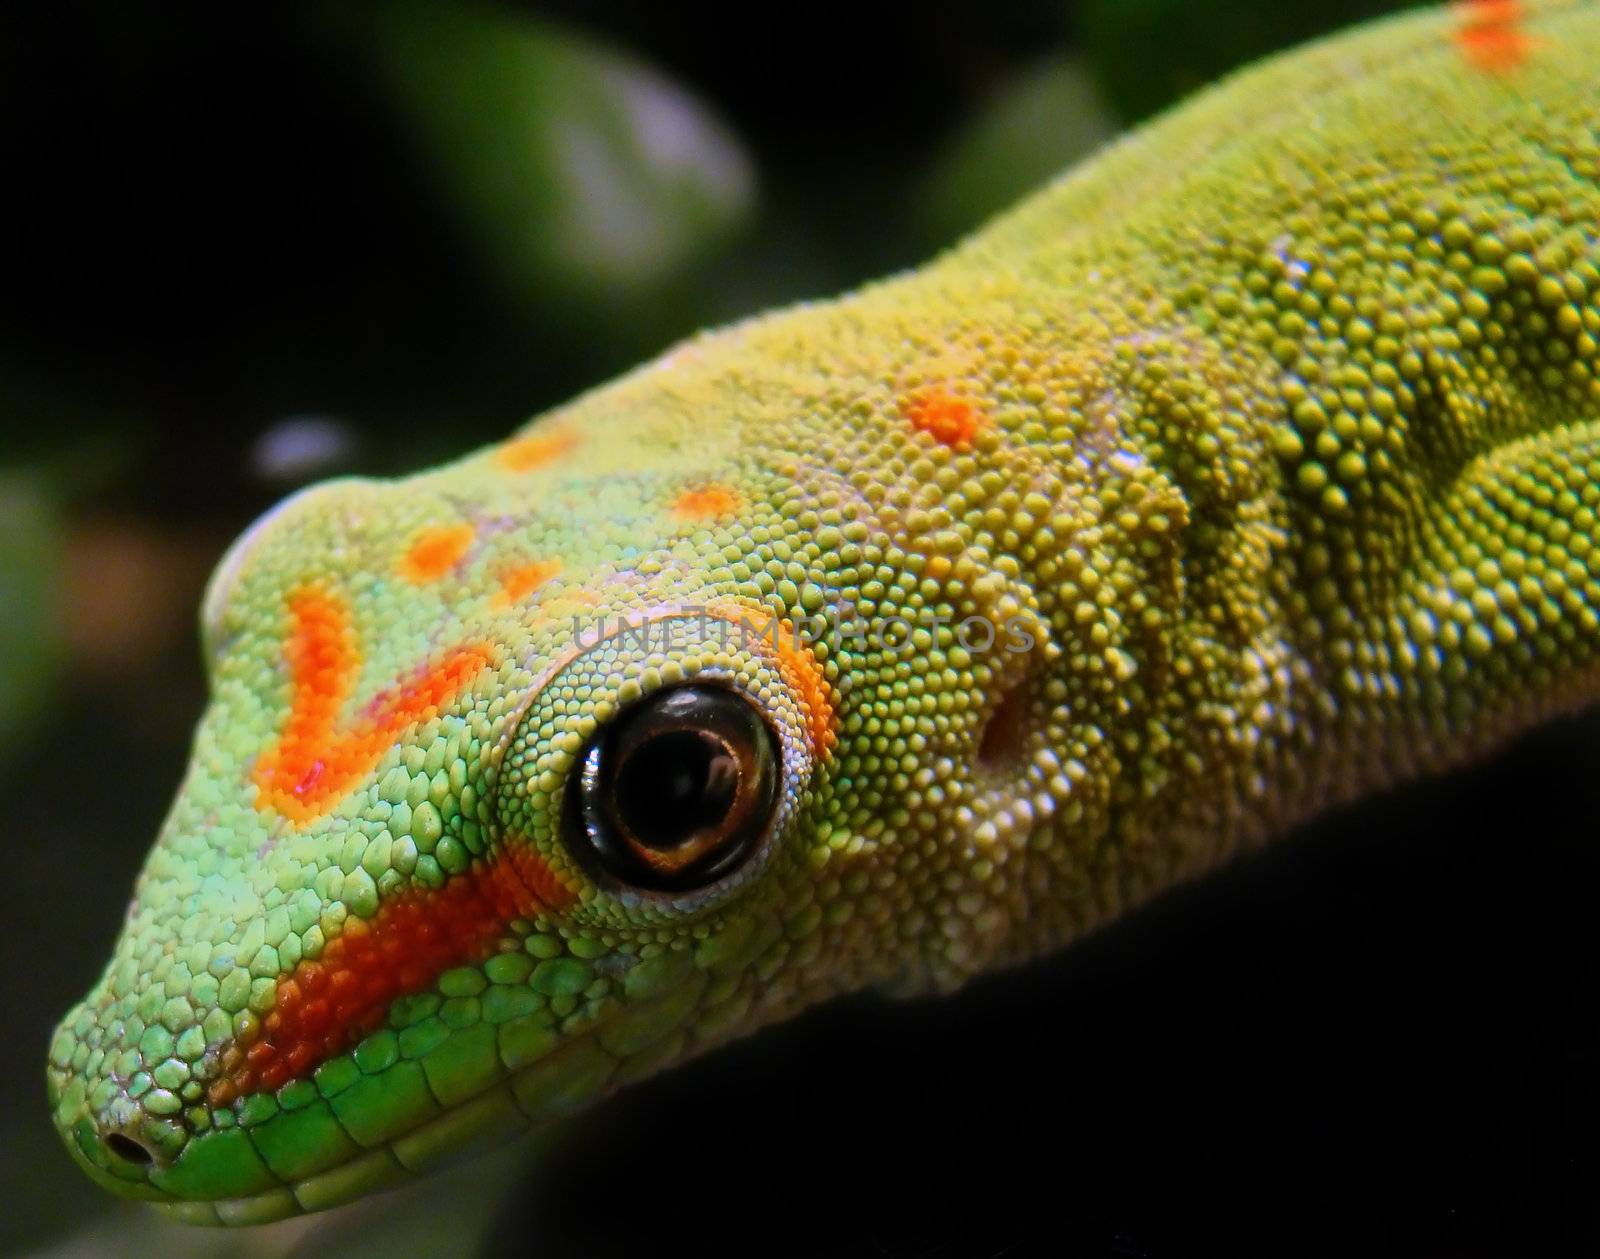           madagascar giant day gecko by amandaols